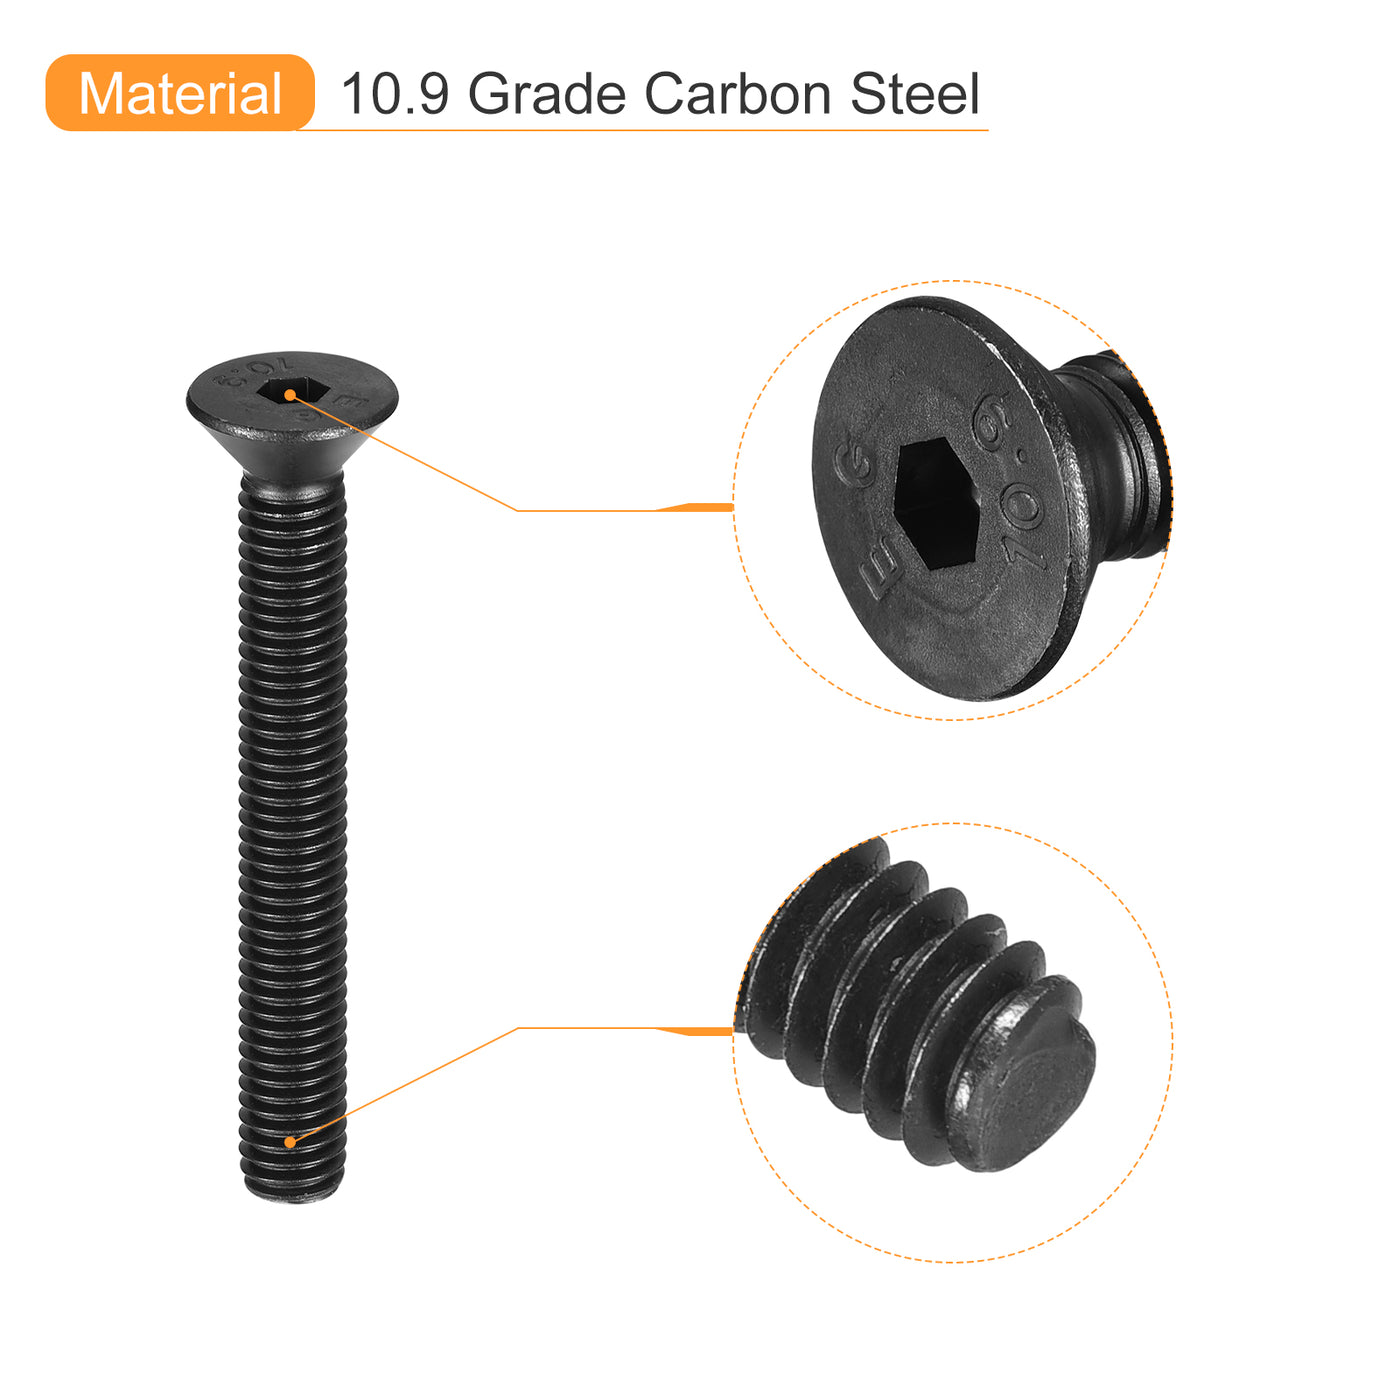 uxcell Uxcell 3/8-16x3" Flat Head Socket Cap Screws, 10.9 Grade Carbon Steel, 10PCS